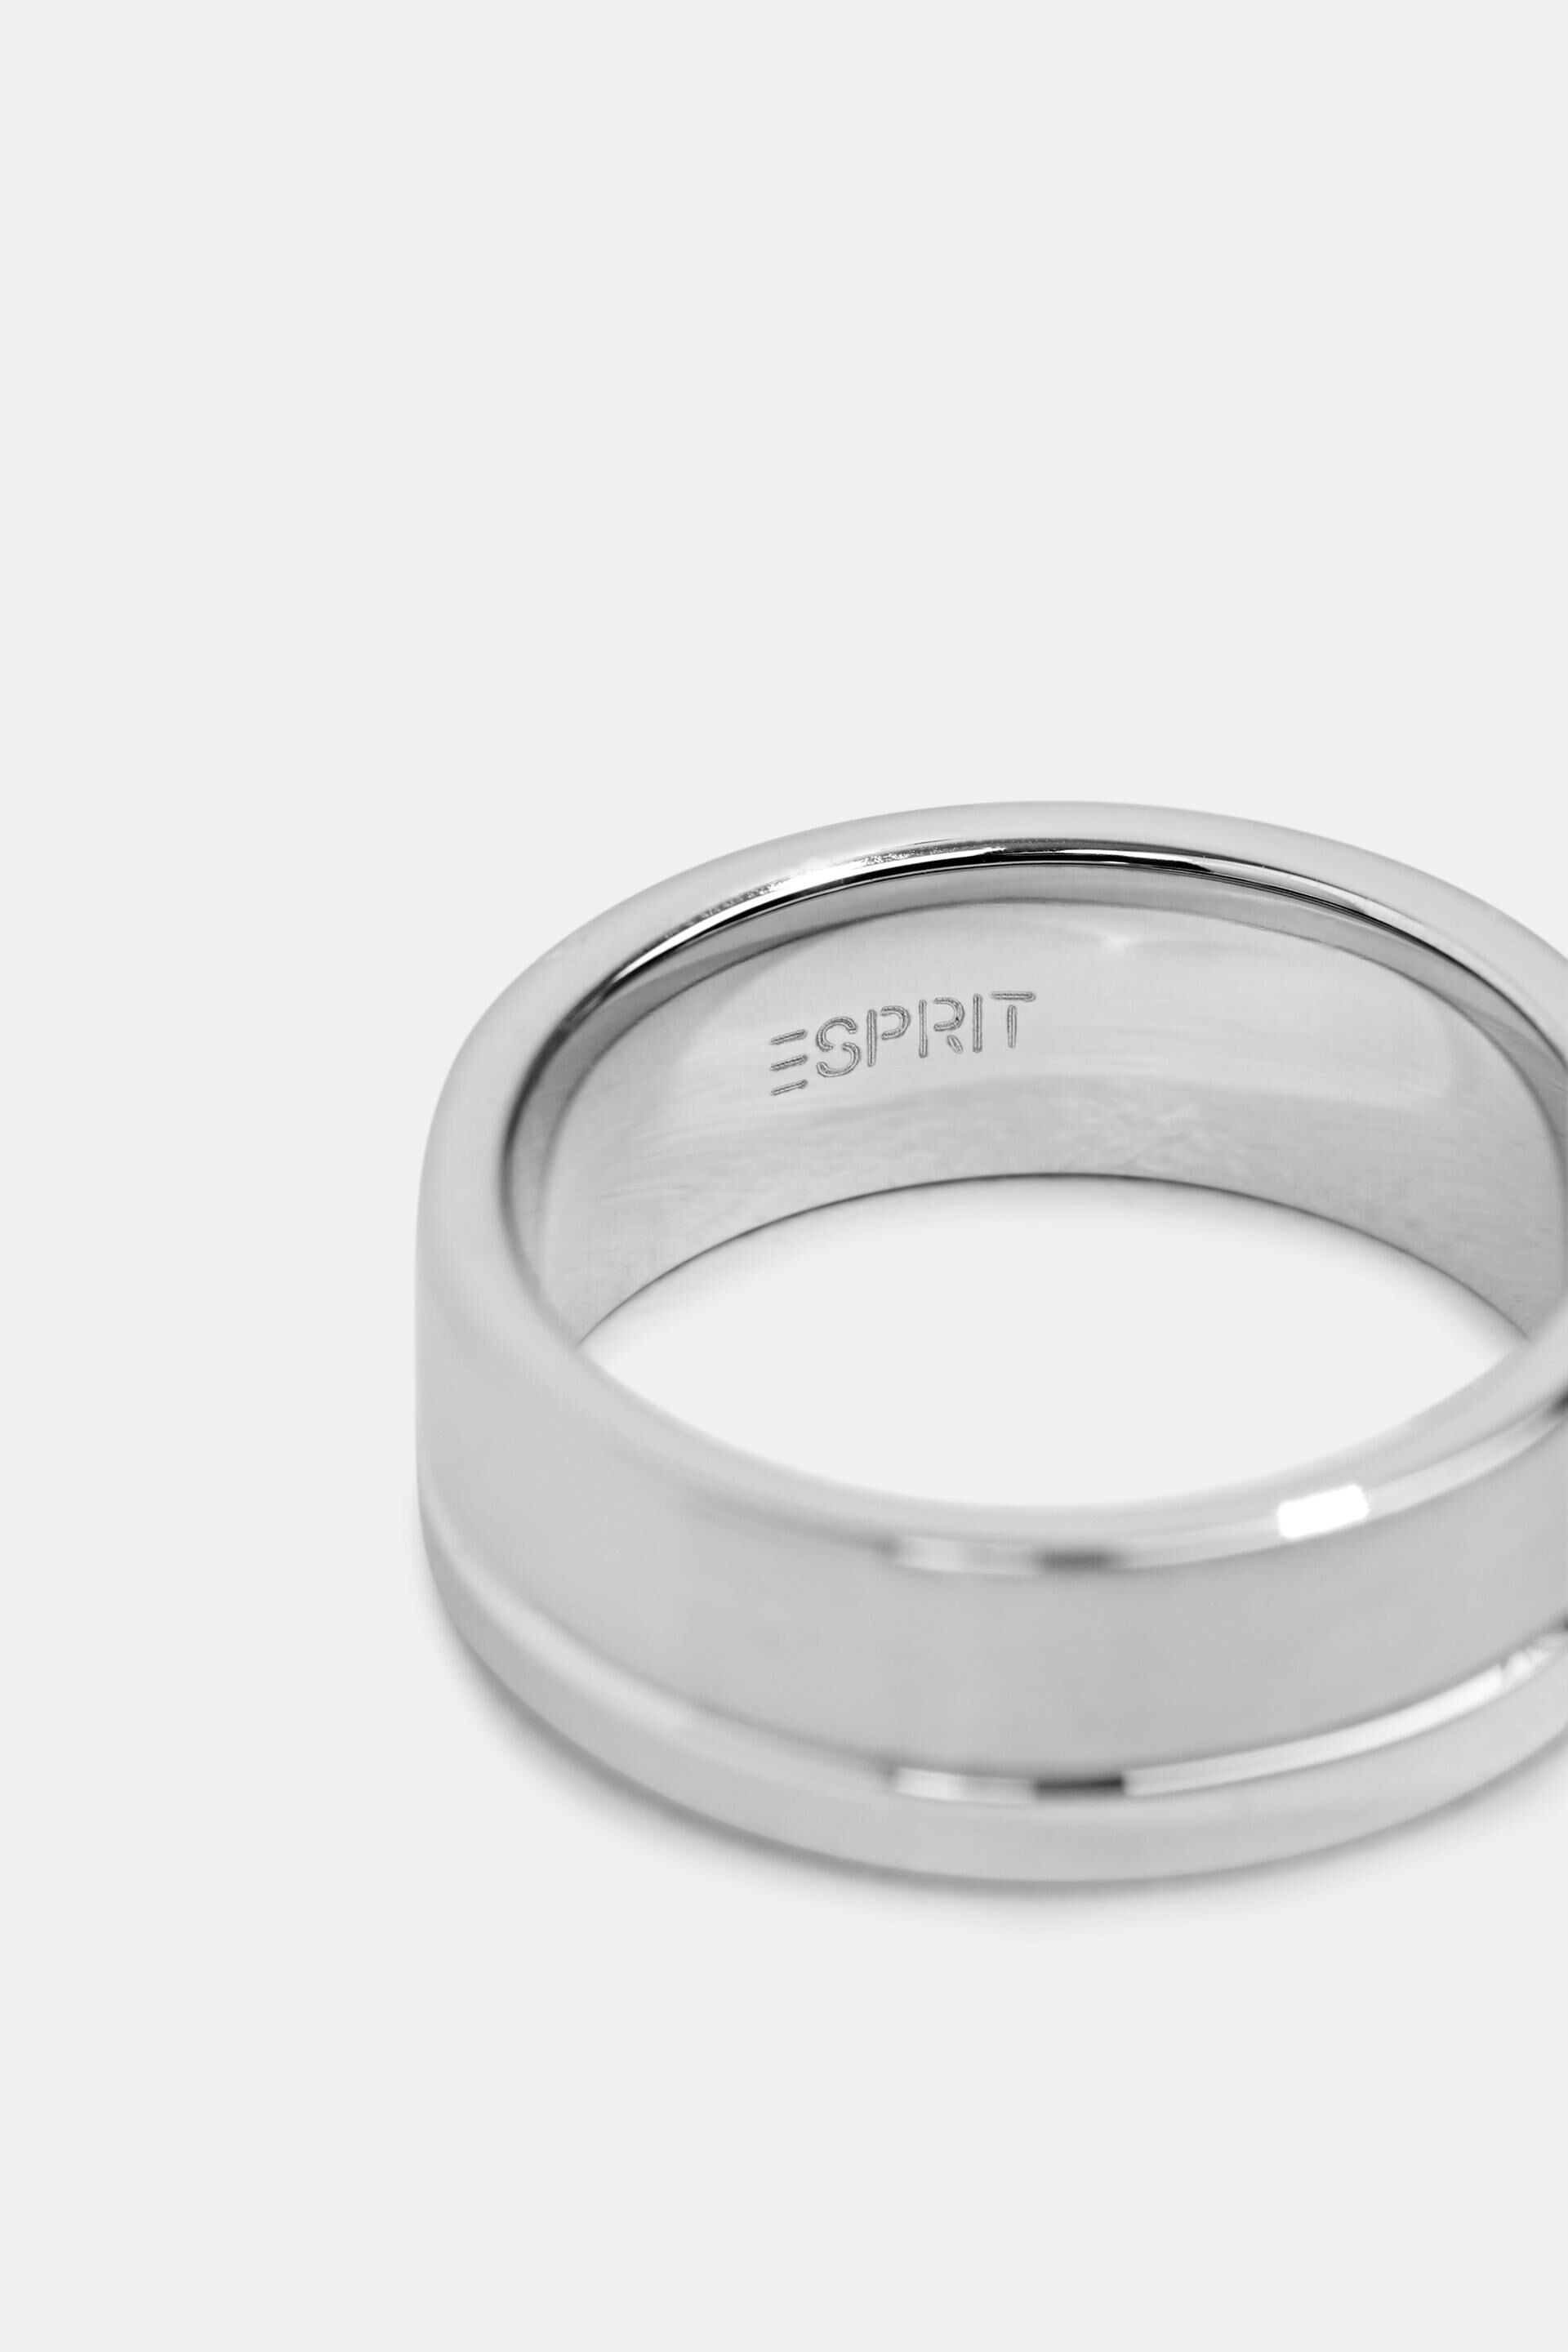 initial Brig Laboratorium ESPRIT-Bred ring i rustfrit stål i vores onlinebutik